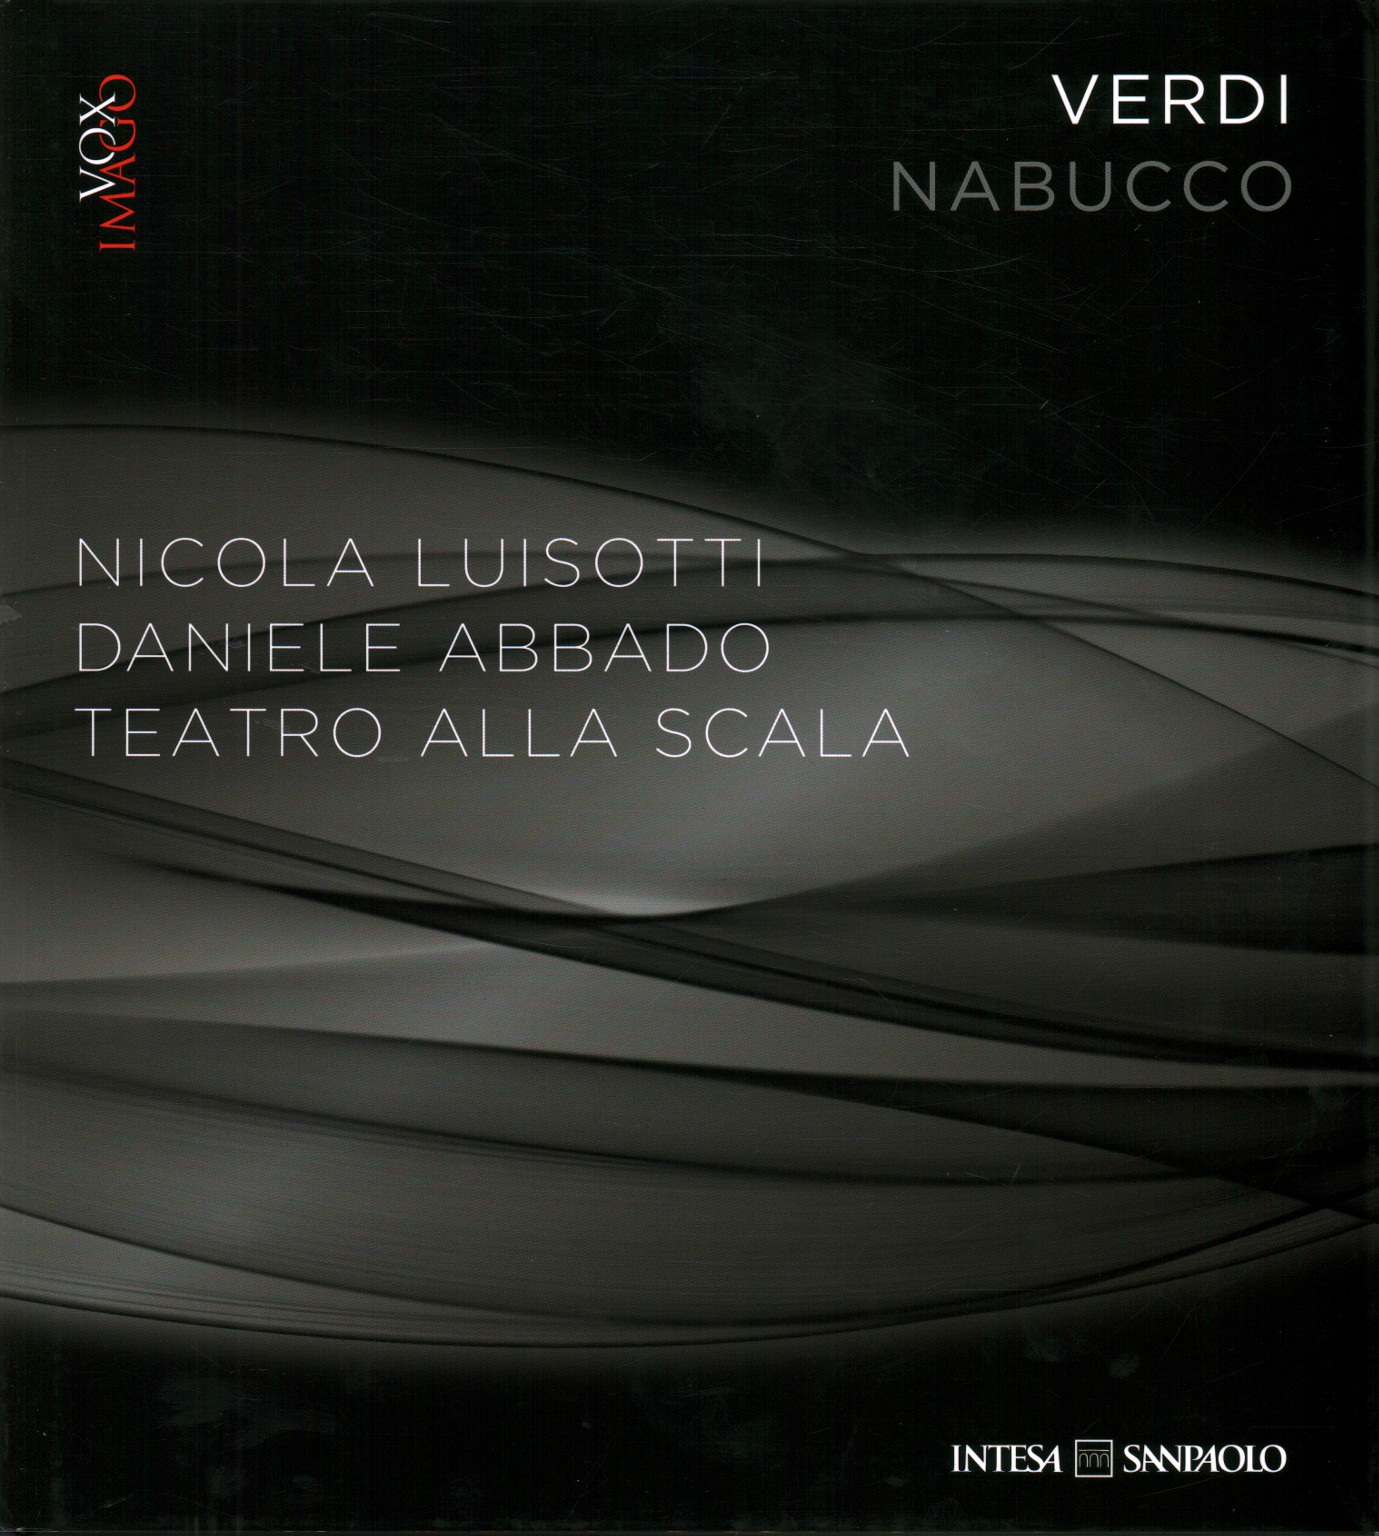 Verdi: Nabucco, Nicola Luisotti Y Daniele Abbado